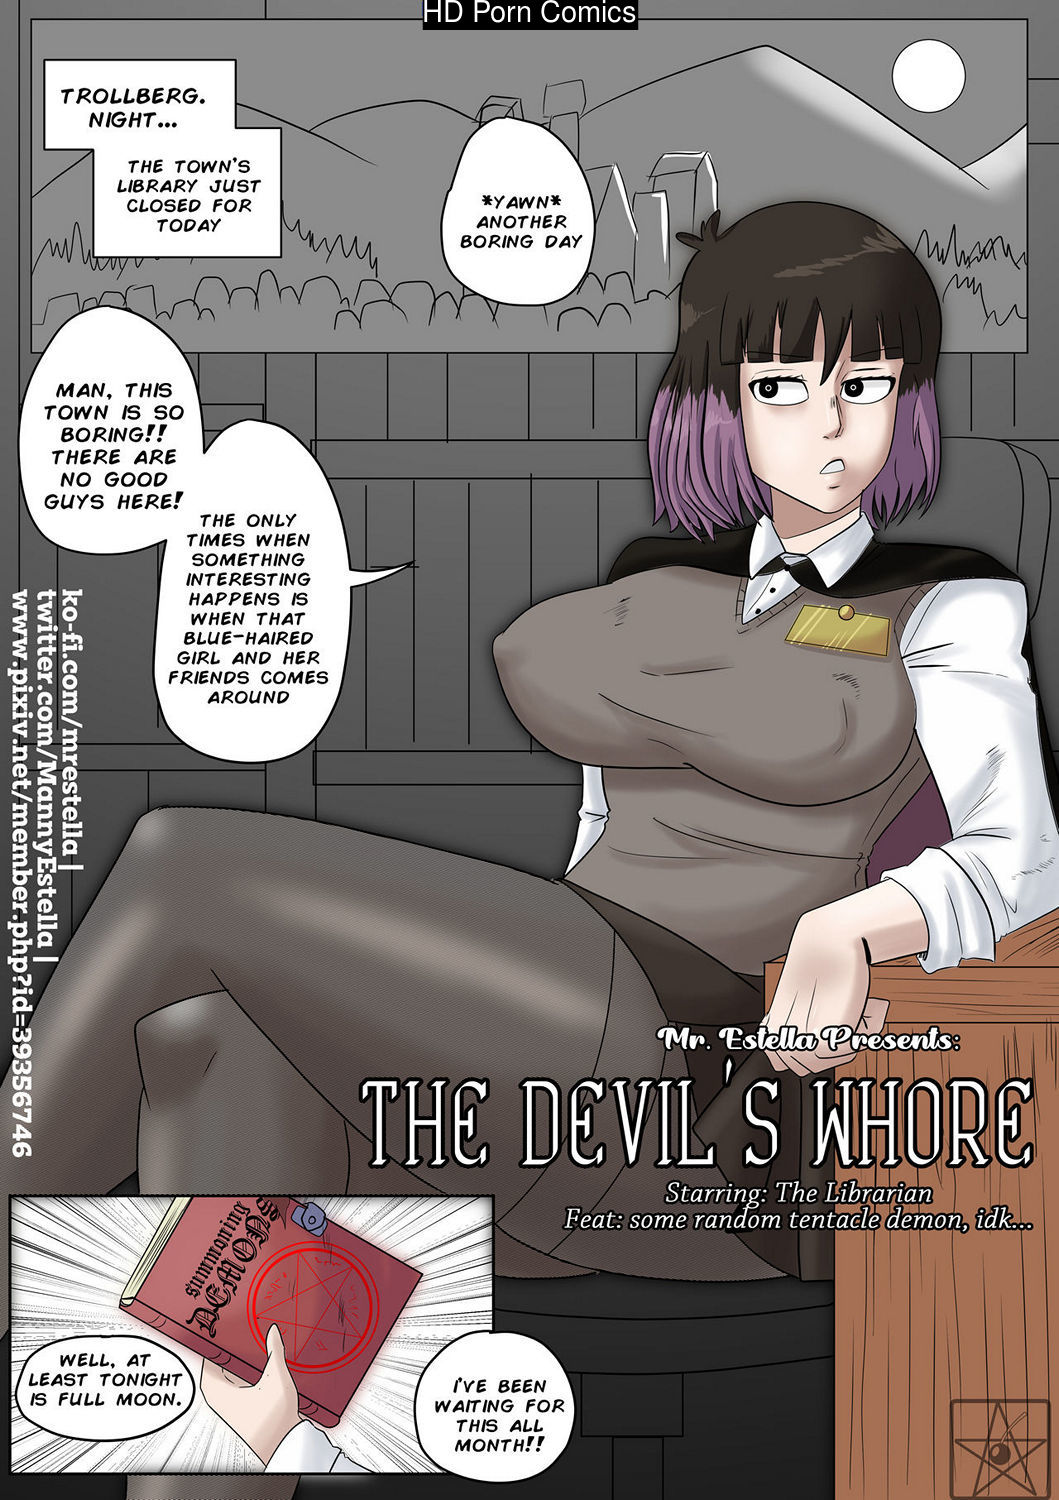 The Devil Fucking Girls Porn Comics - The Devil's Whore comic porn | HD Porn Comics